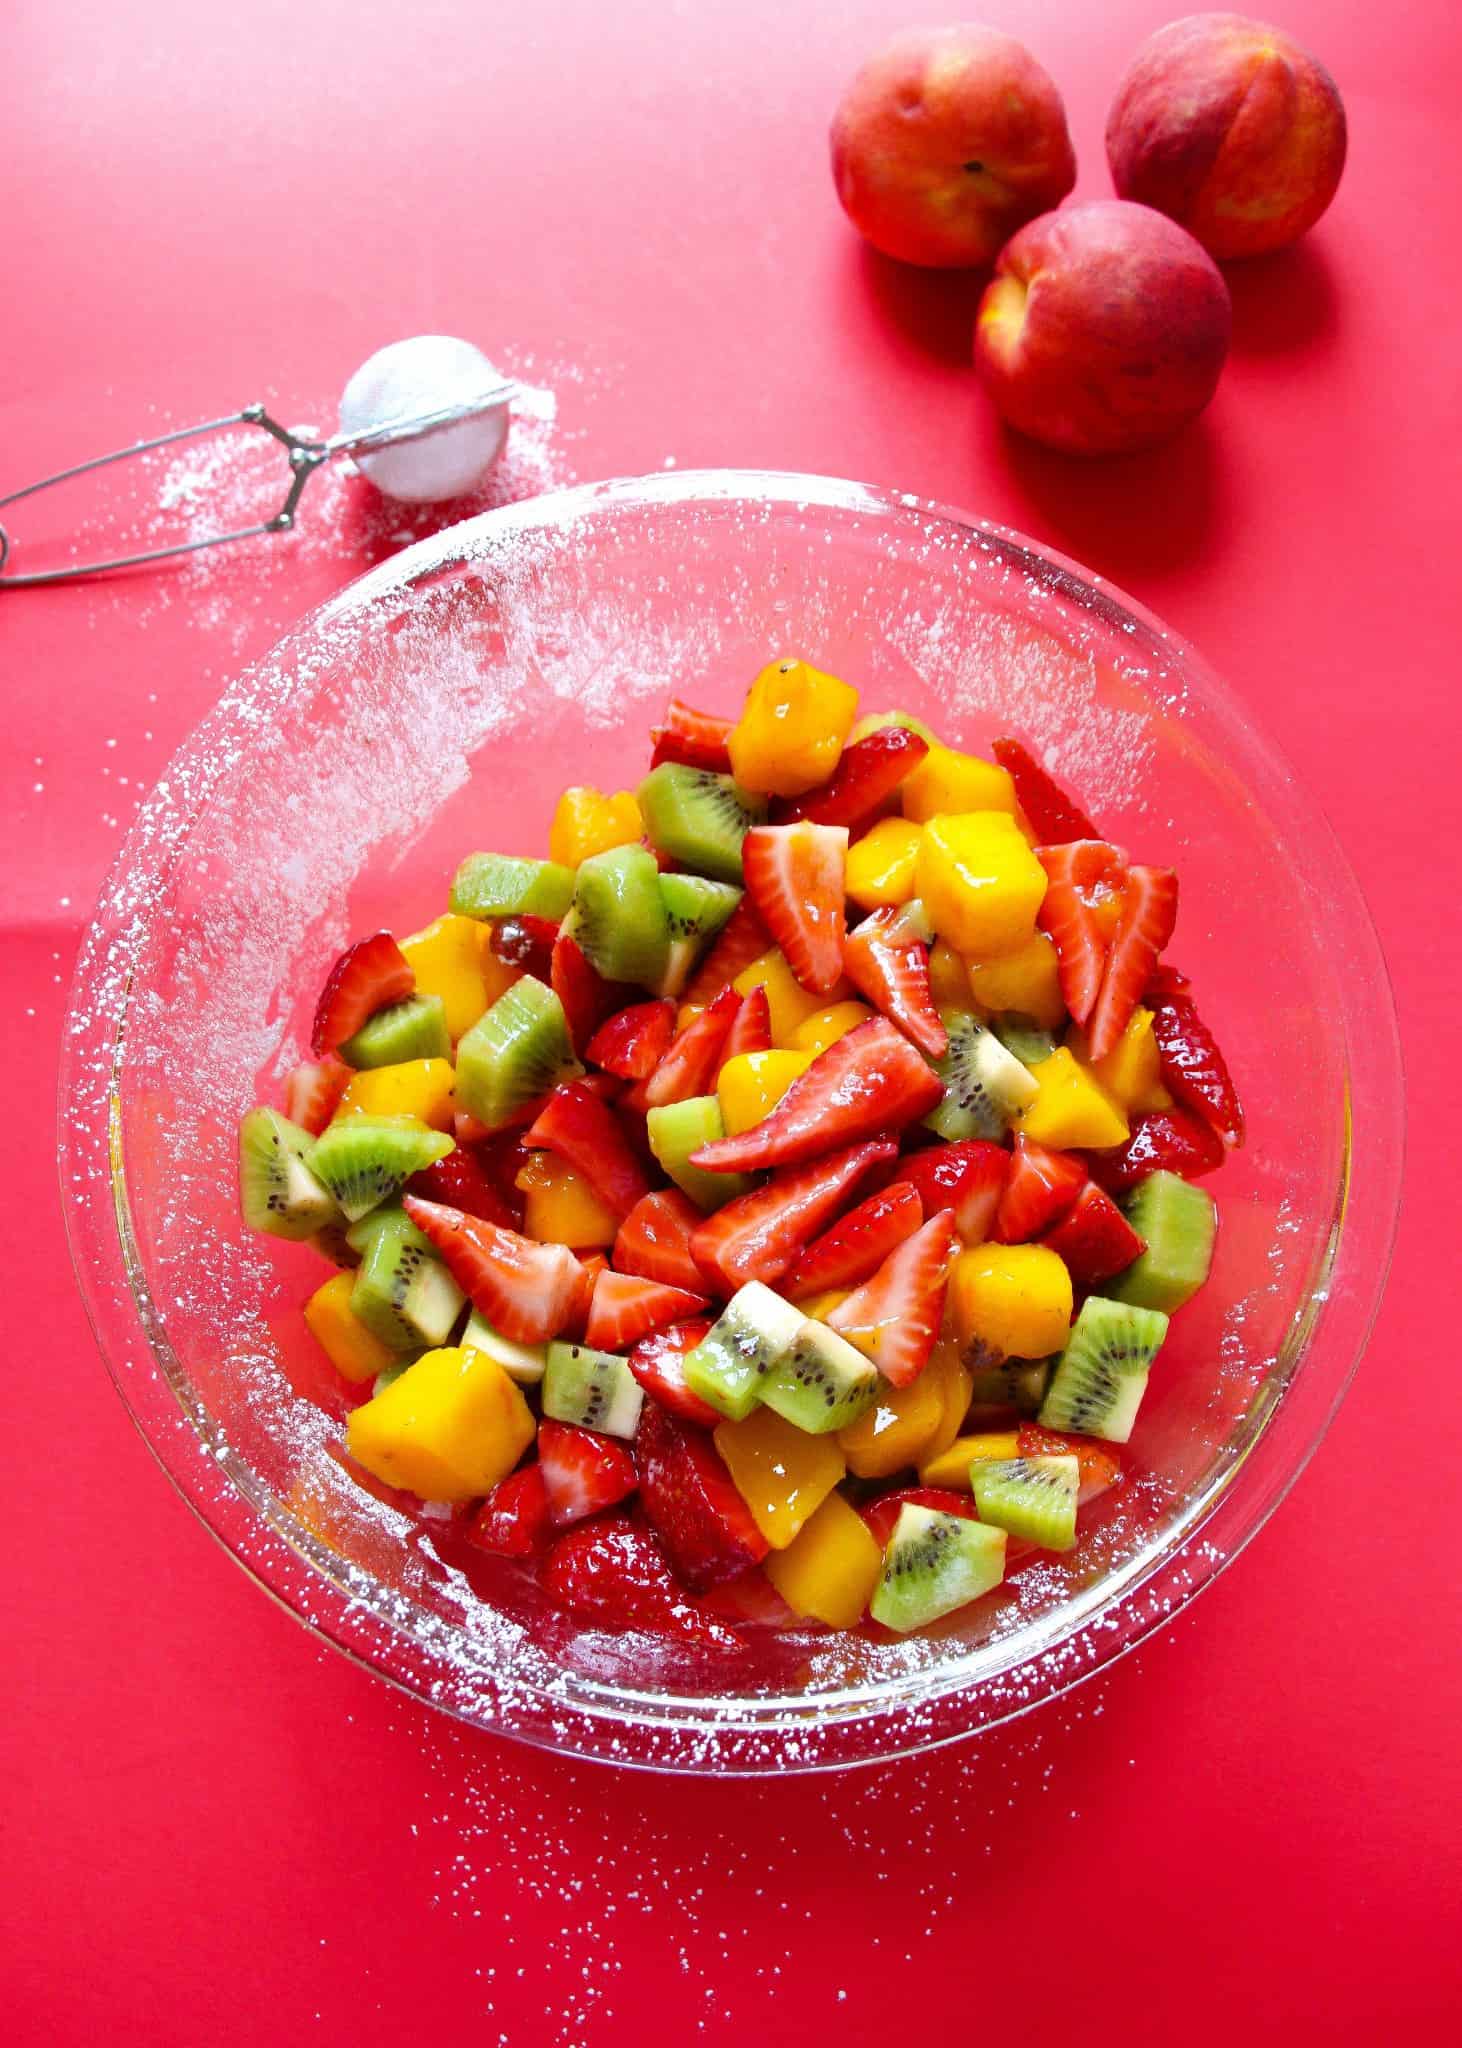 Fruit salad with strawberries, kiwis, mangoes and powdered sugar